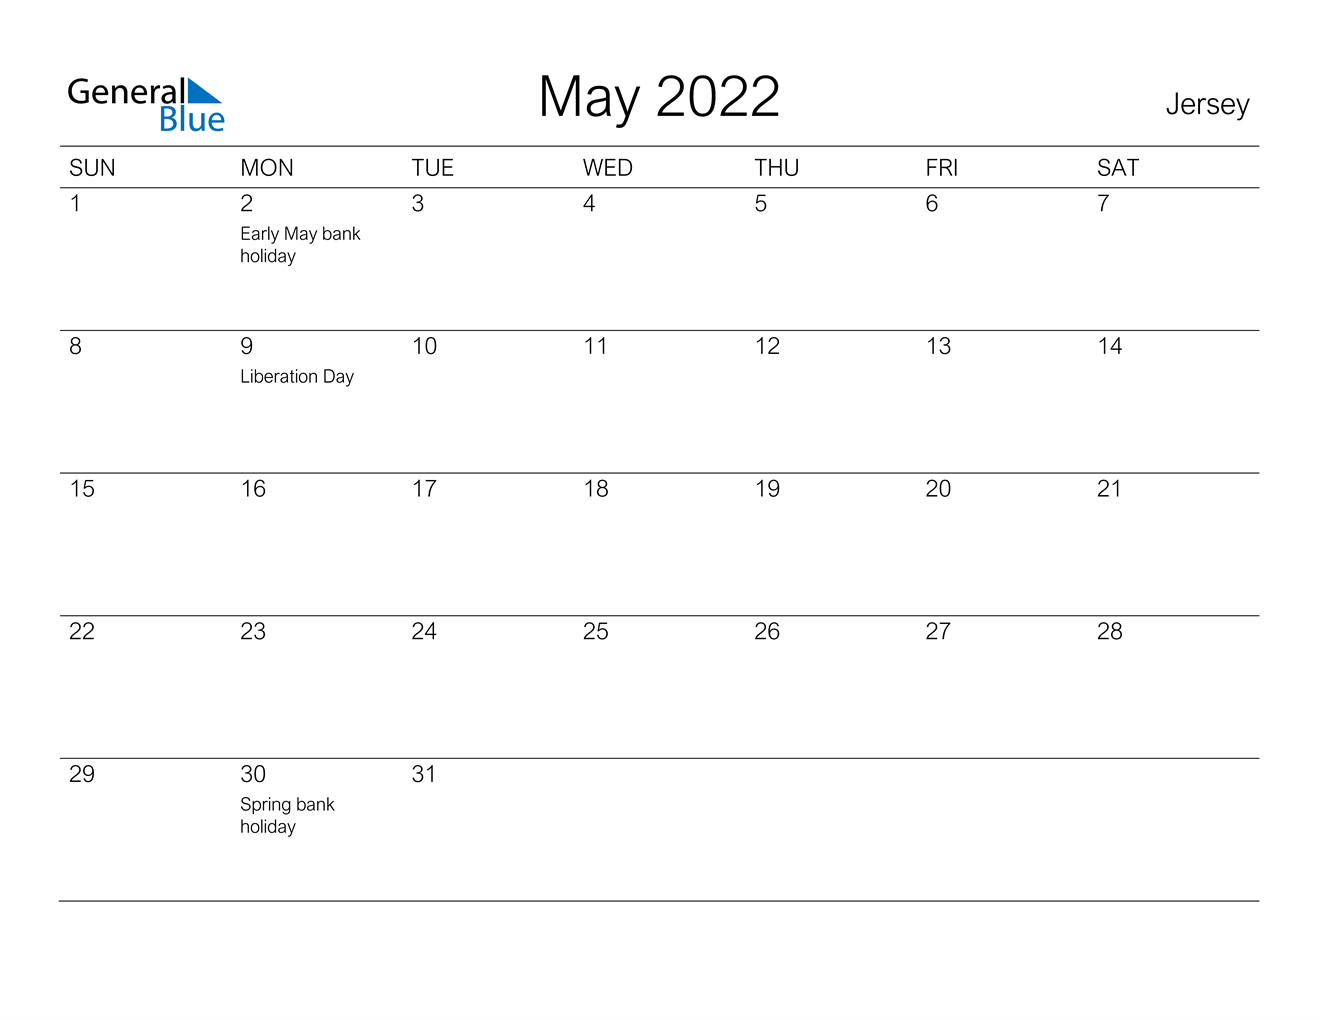 May 2022 Calendar - Jersey